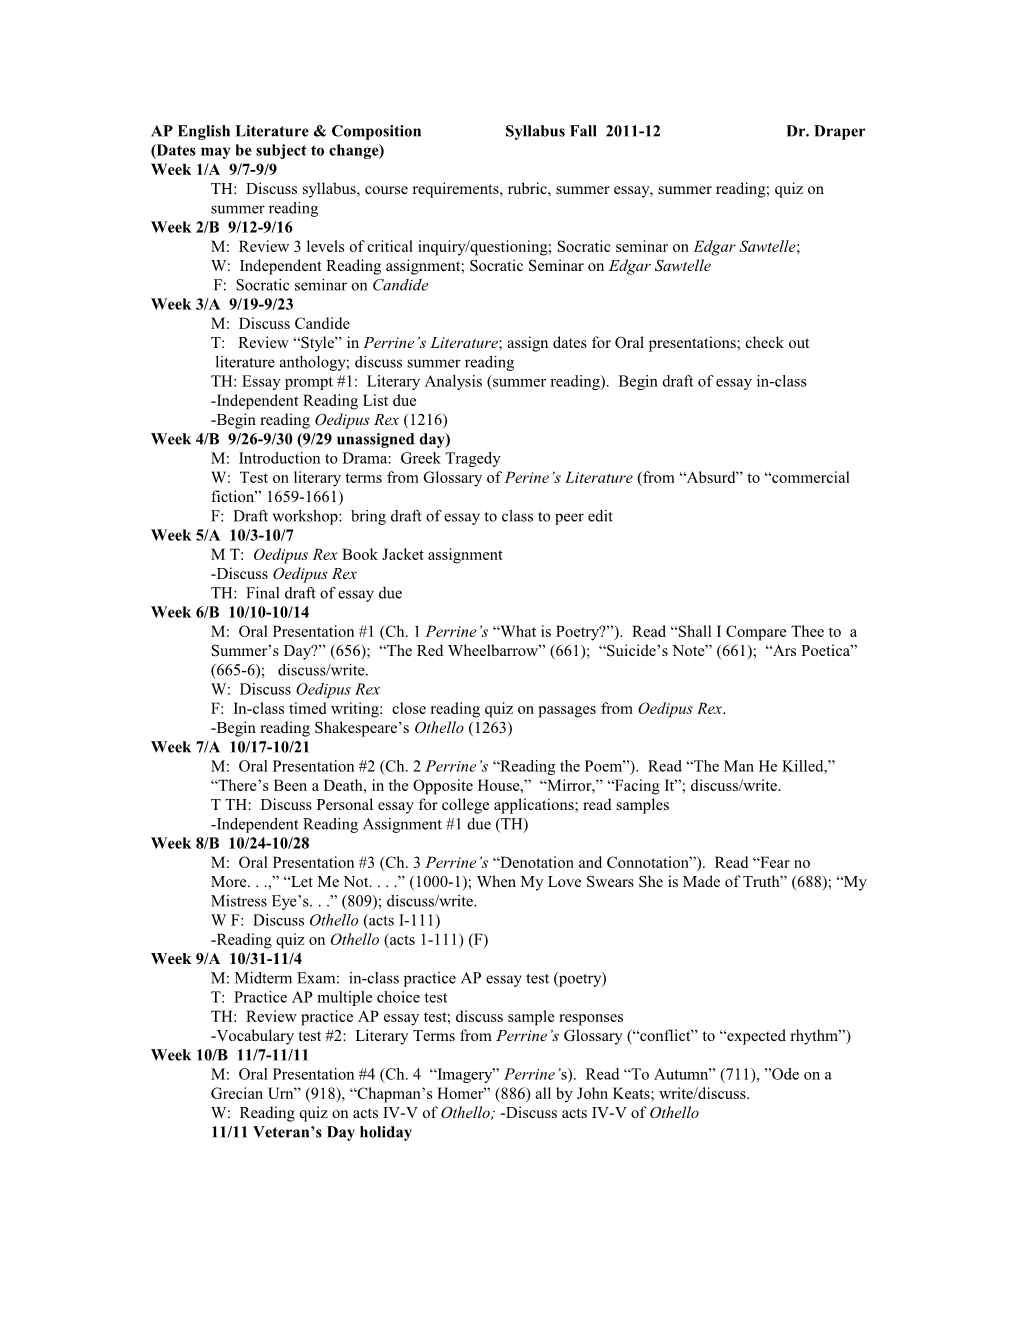 AP English Literature & Composition Syllabus Fall 2010-11 Dr